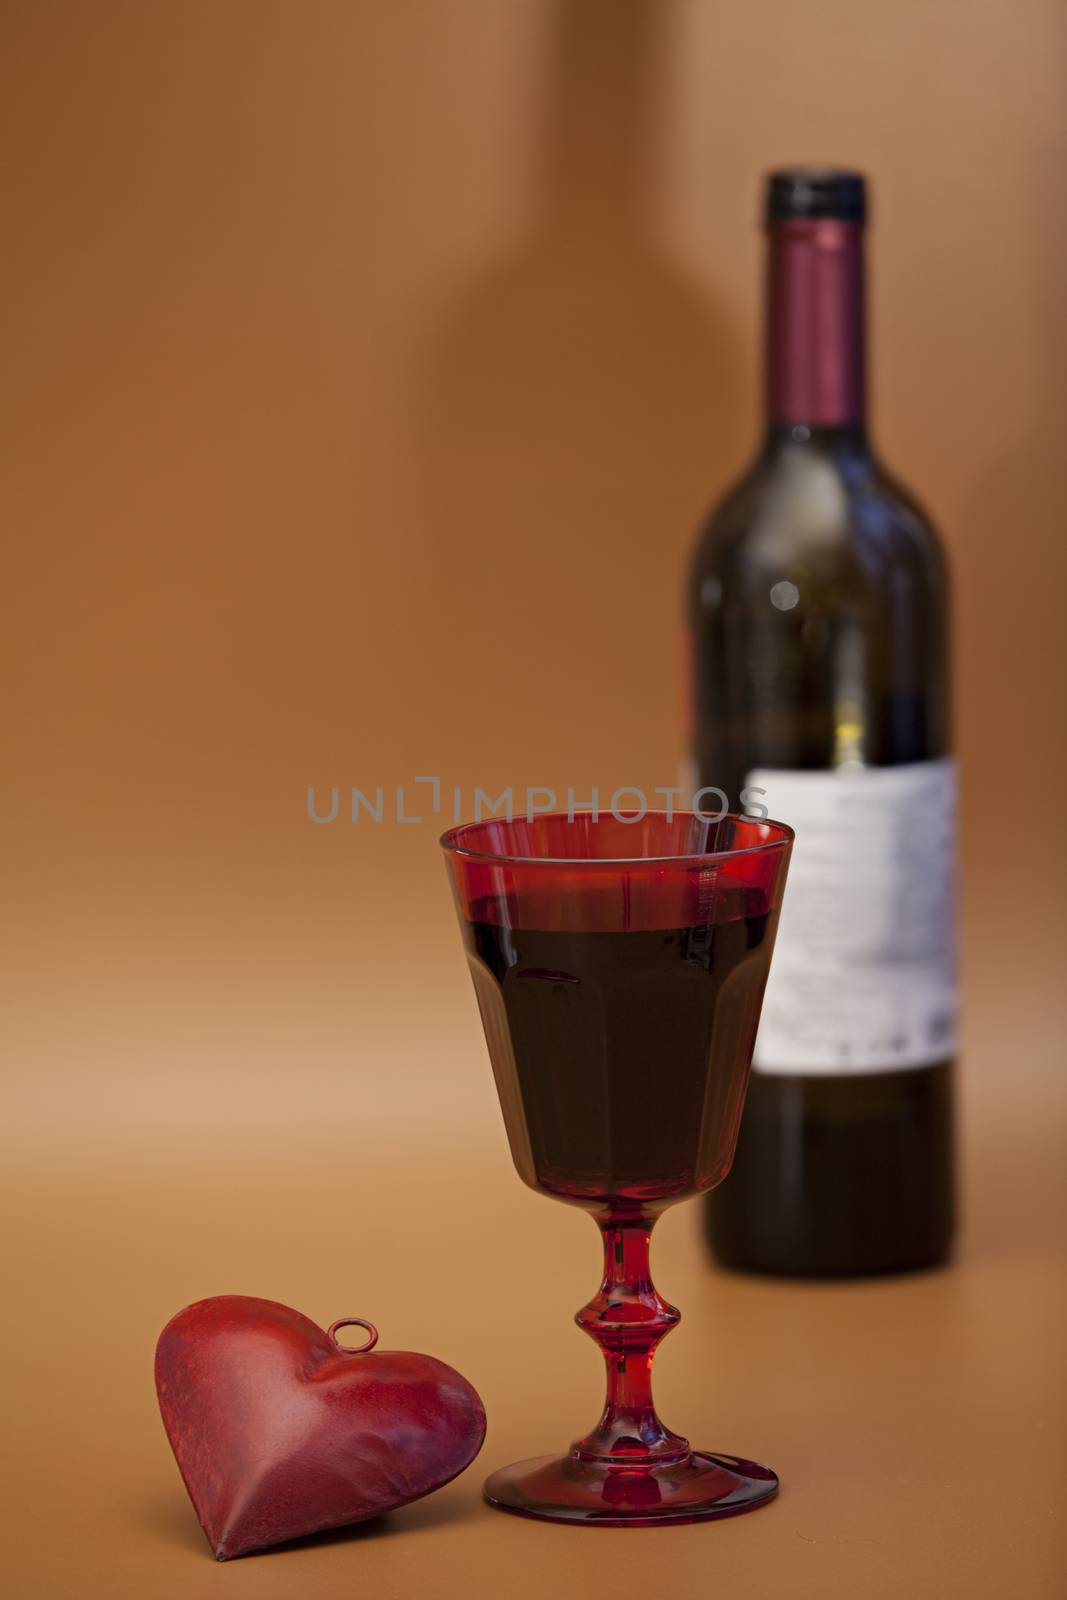  red wine, full glass, tart favorite drink, winemaking bottle background,  bid wedding love romantic  